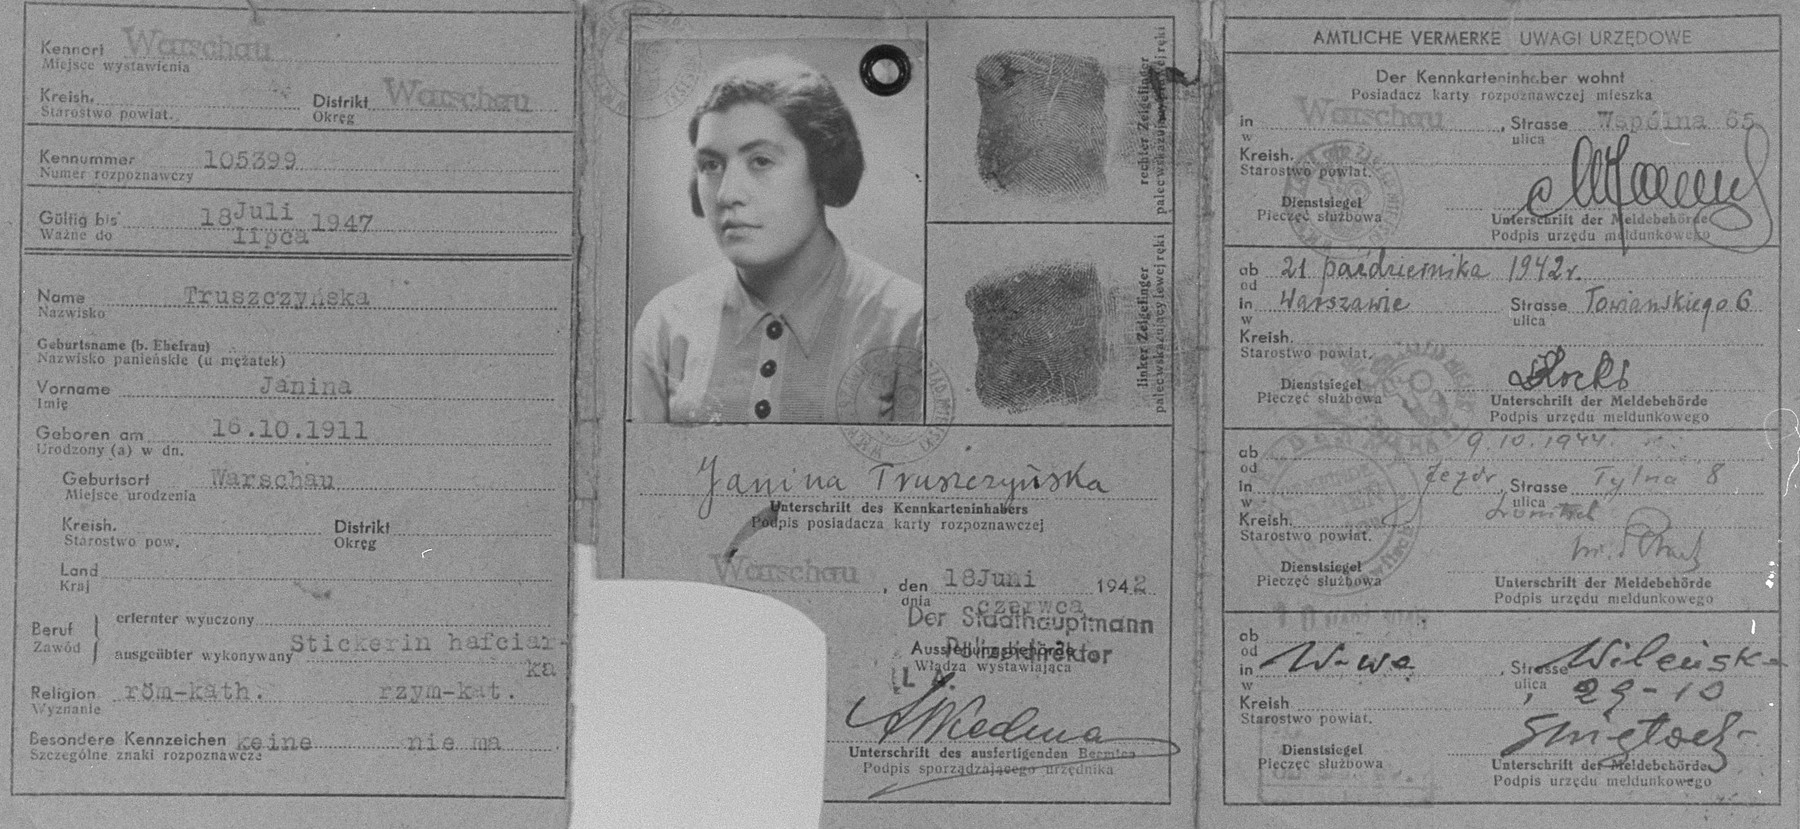 Documento d’identità falso del membro di Żegota Izabela Bieżuńska